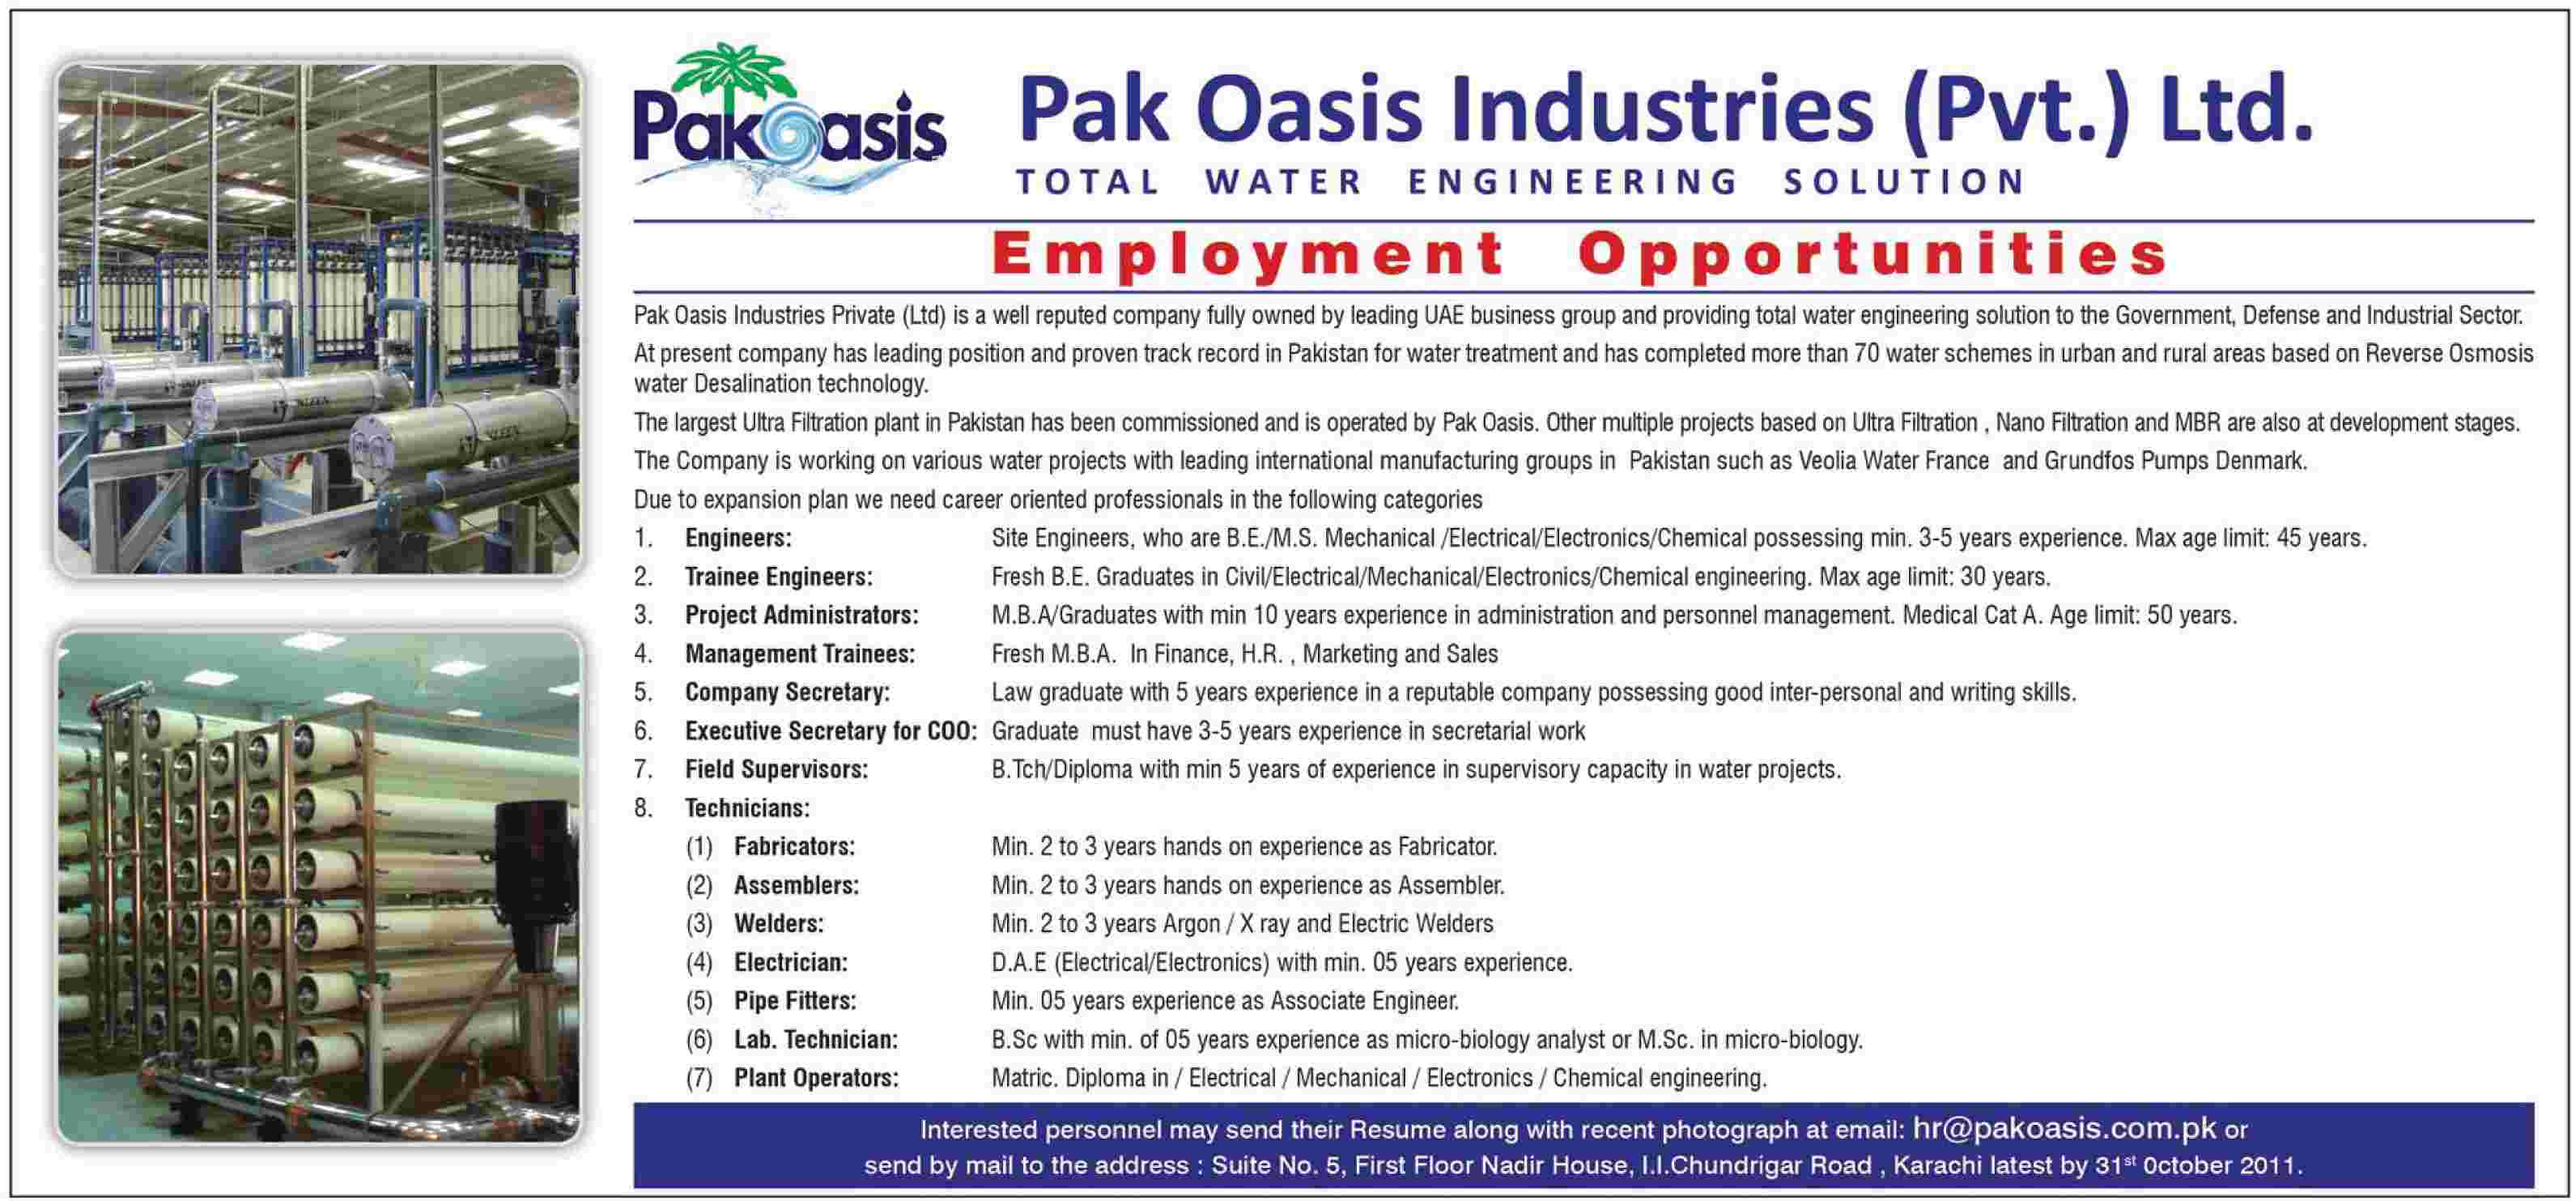 Pak Oasis Industries (Pvt.) Ltd. Employment Opportunities